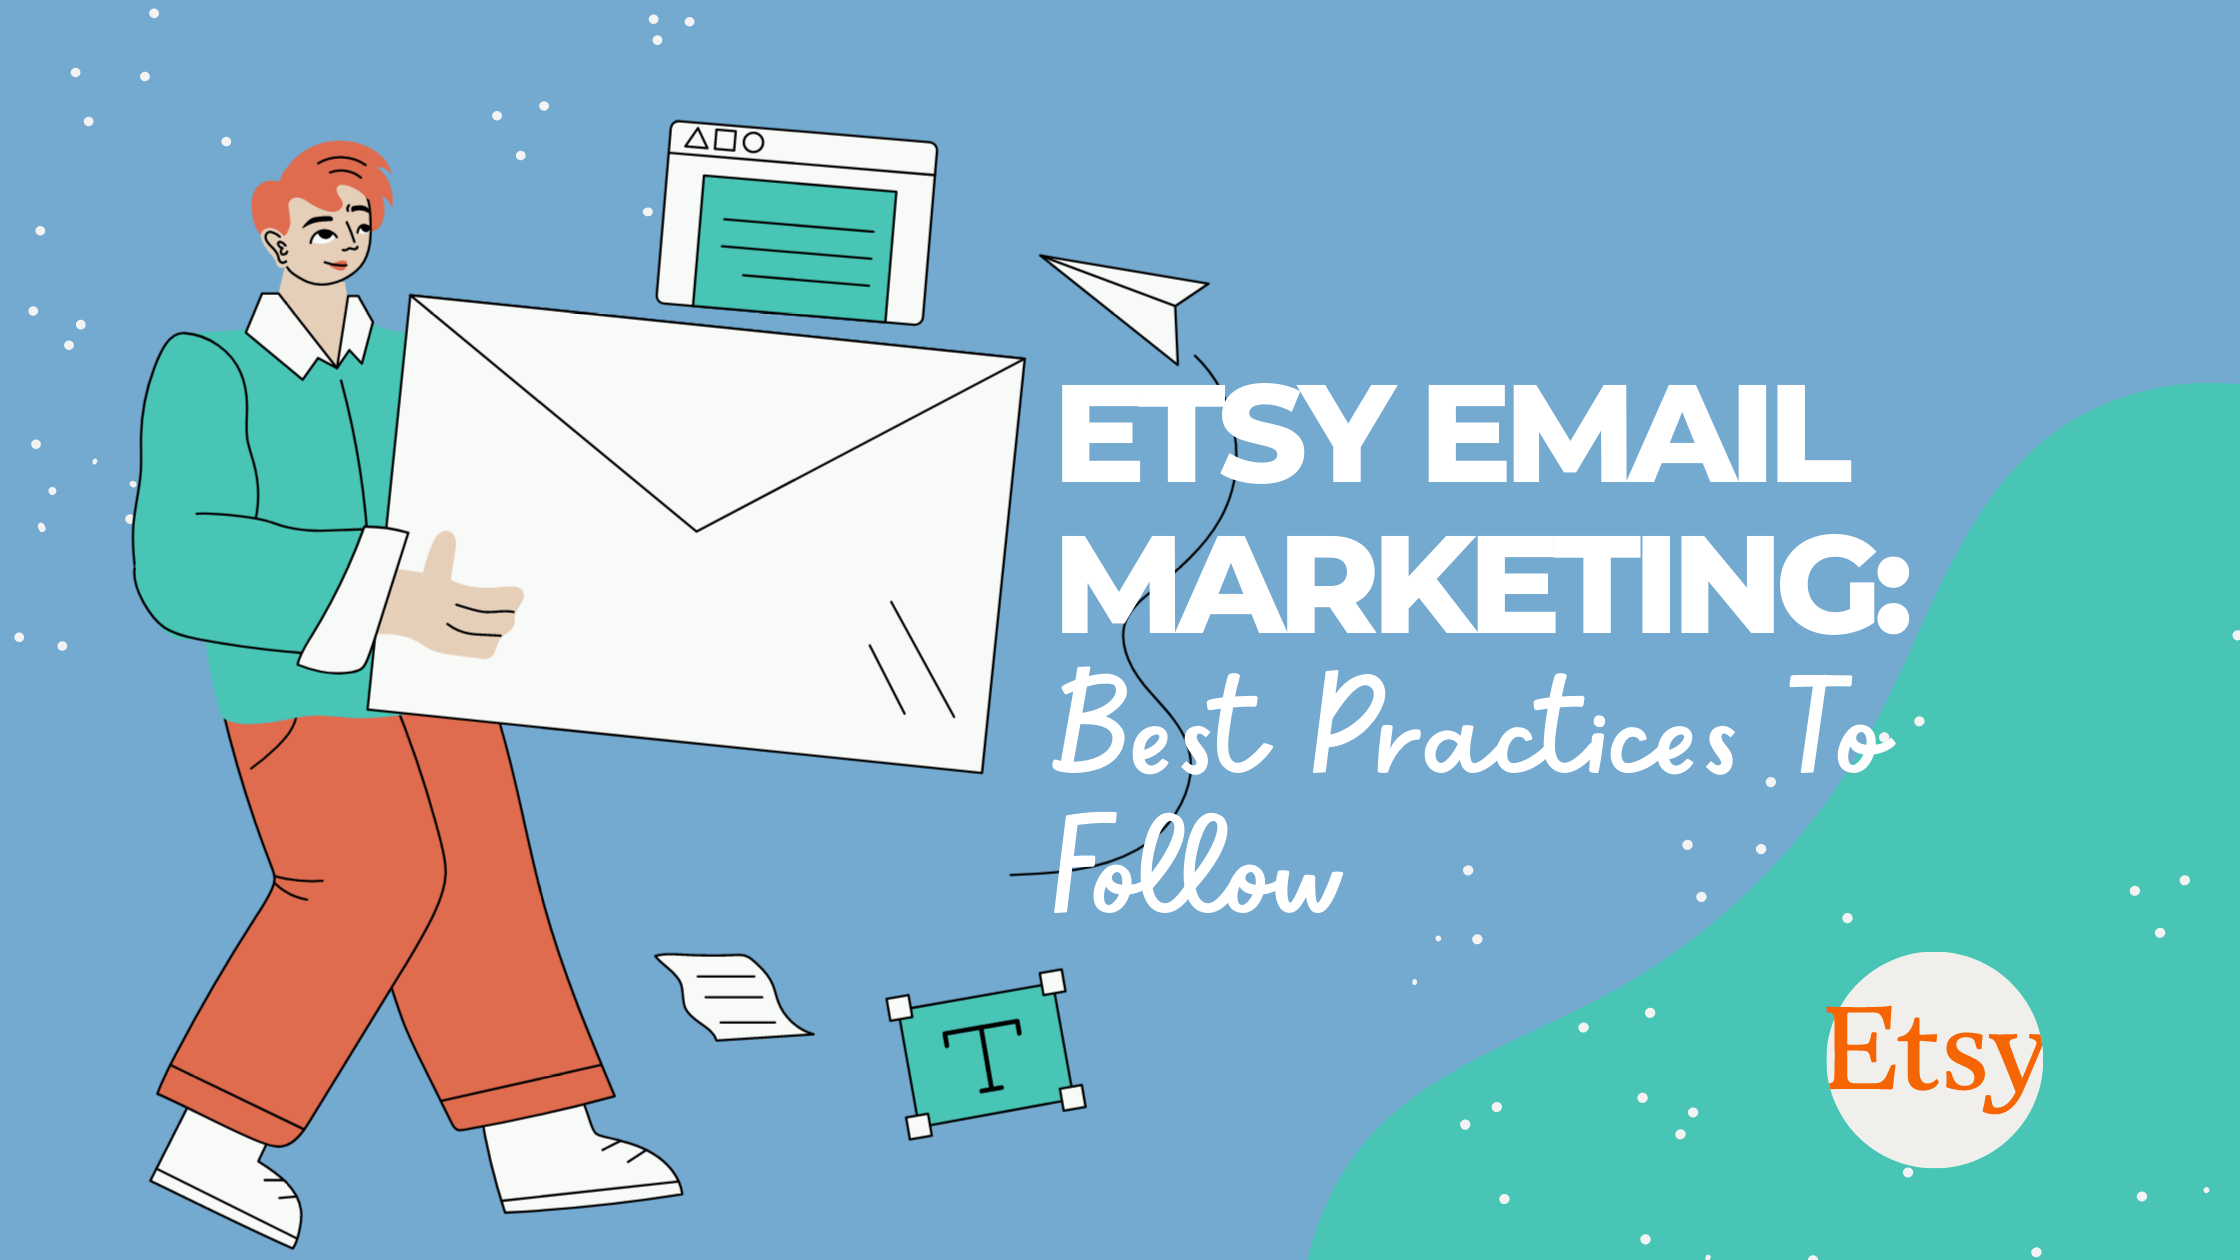 Etsy Email Marketing: